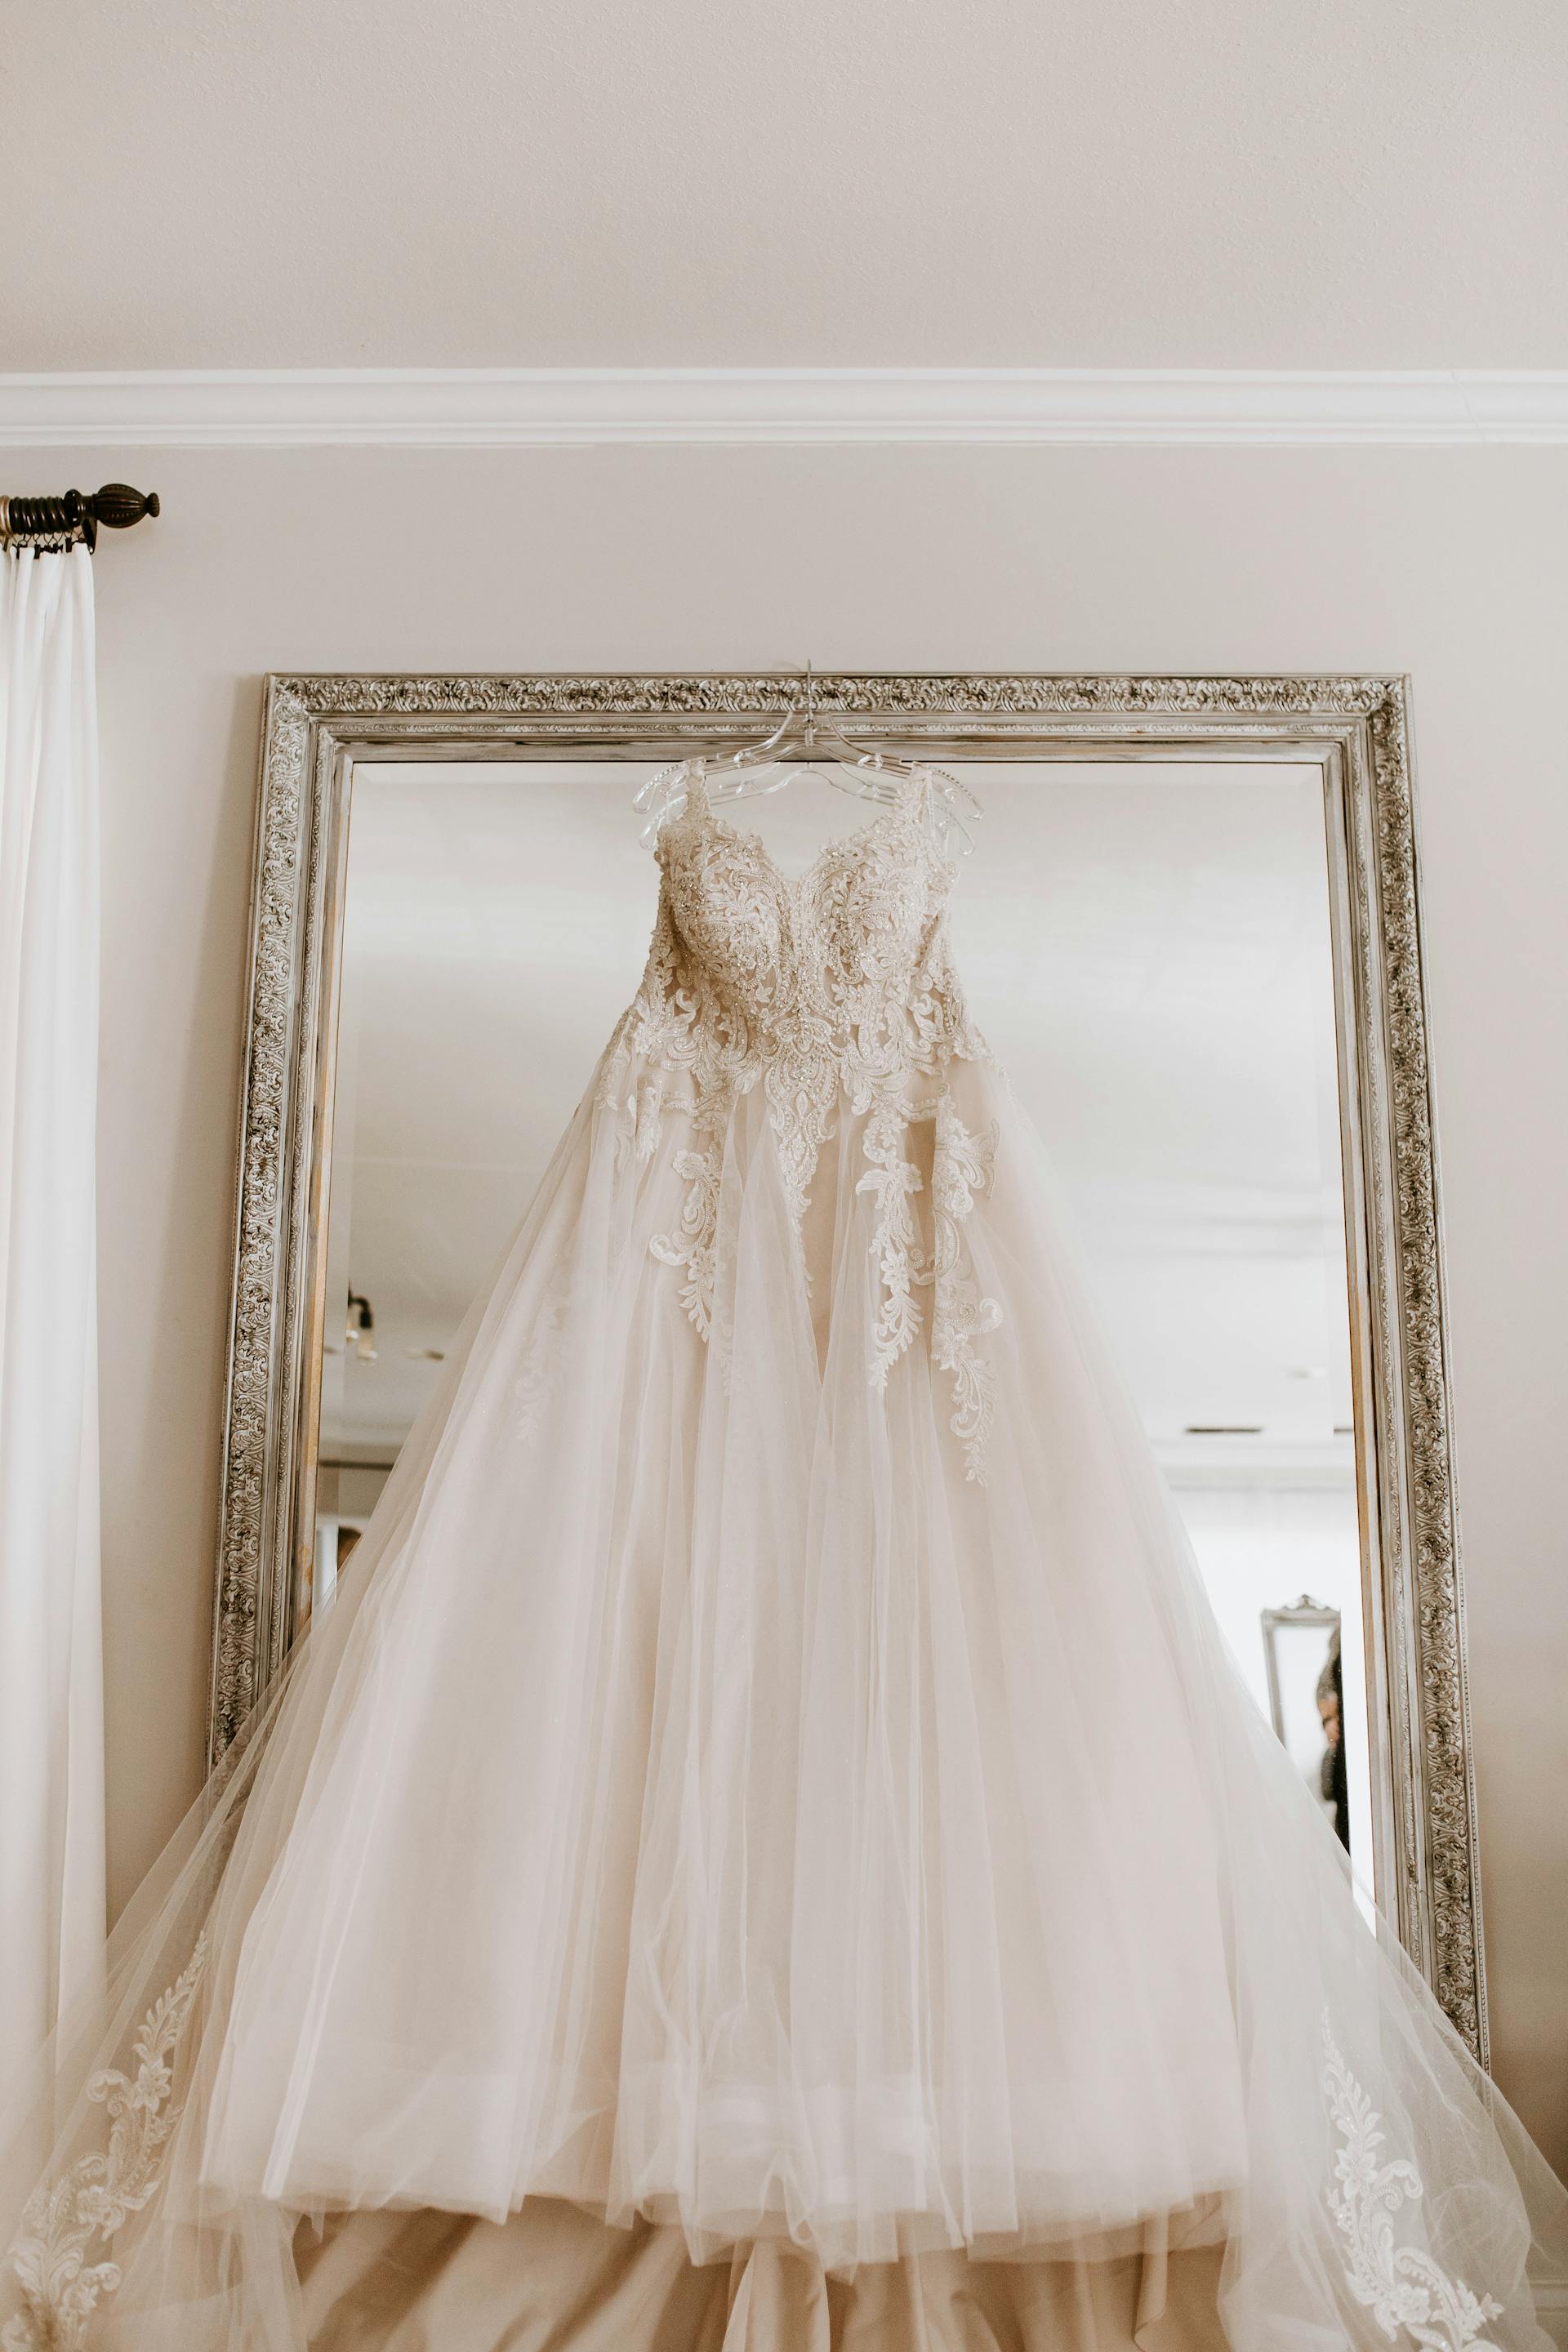 A gorgeous bridal gown | Source: Pexels